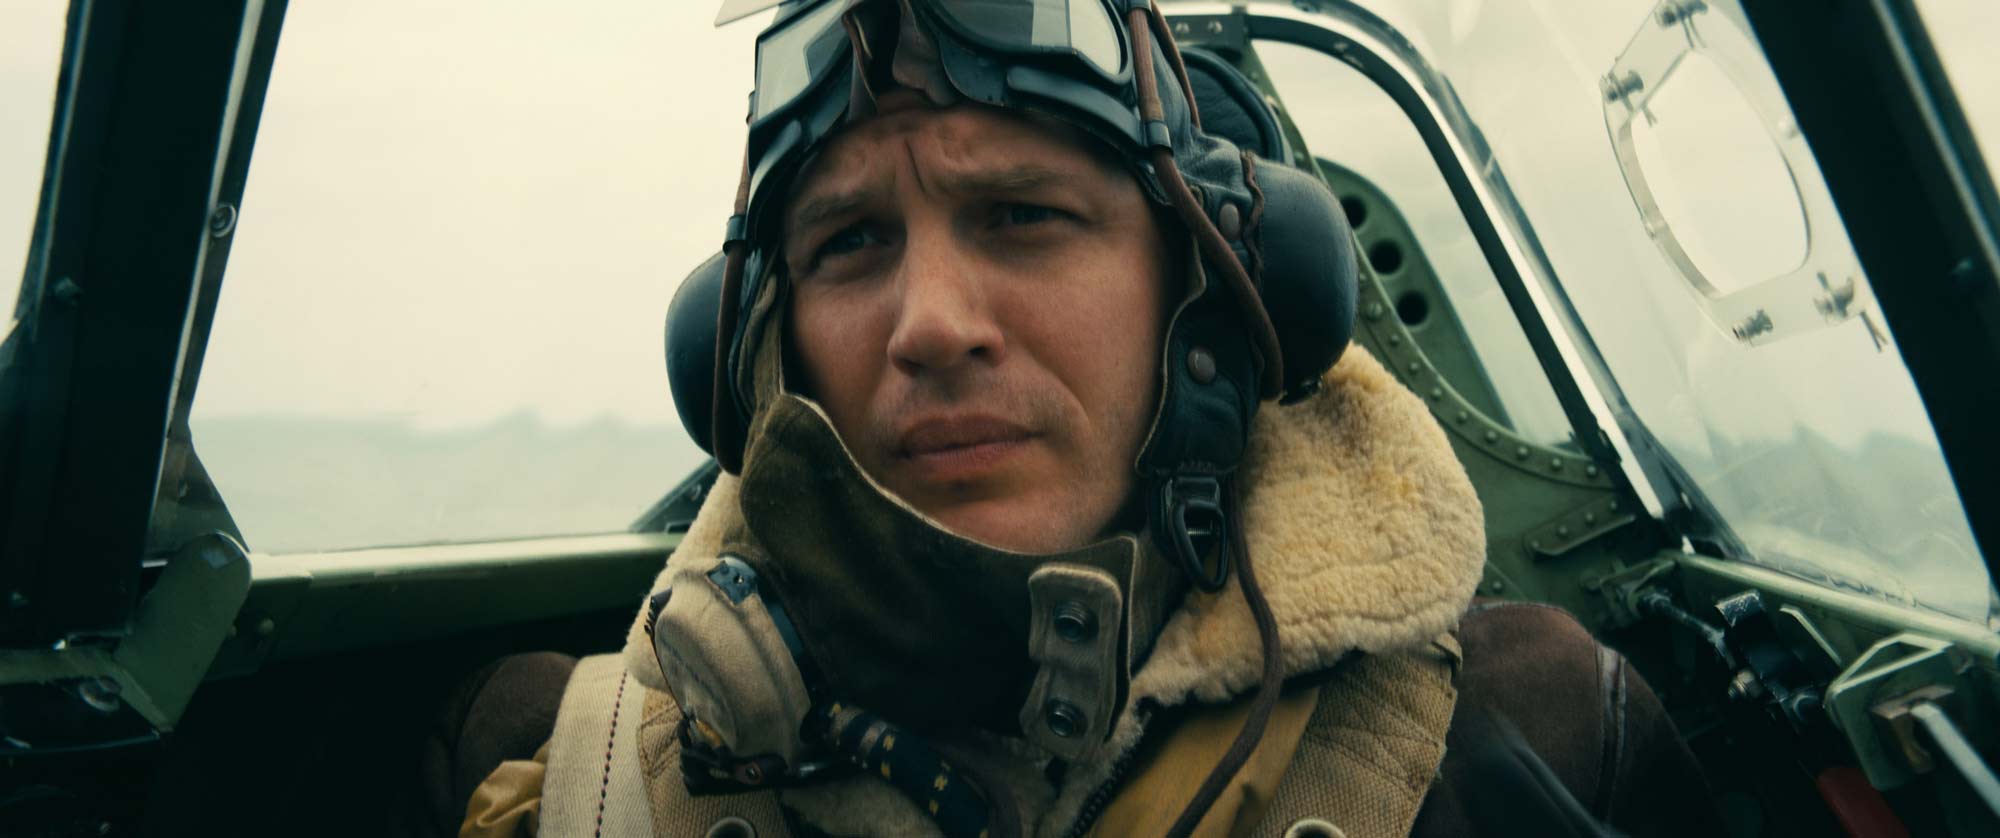 Christopher Nolan 終於要拍戰爭片了，很難不叫人好奇，無論你是否喜歡他。Christoper Nolan 是一個不甘平凡的導演，看他的作品，總有別出心裁的敘事形式，對於技術上的要求也特別高。《鄧寇克大行動》（Dunkirk）這類二戰電影落到他的手裡，又會拍成怎樣？